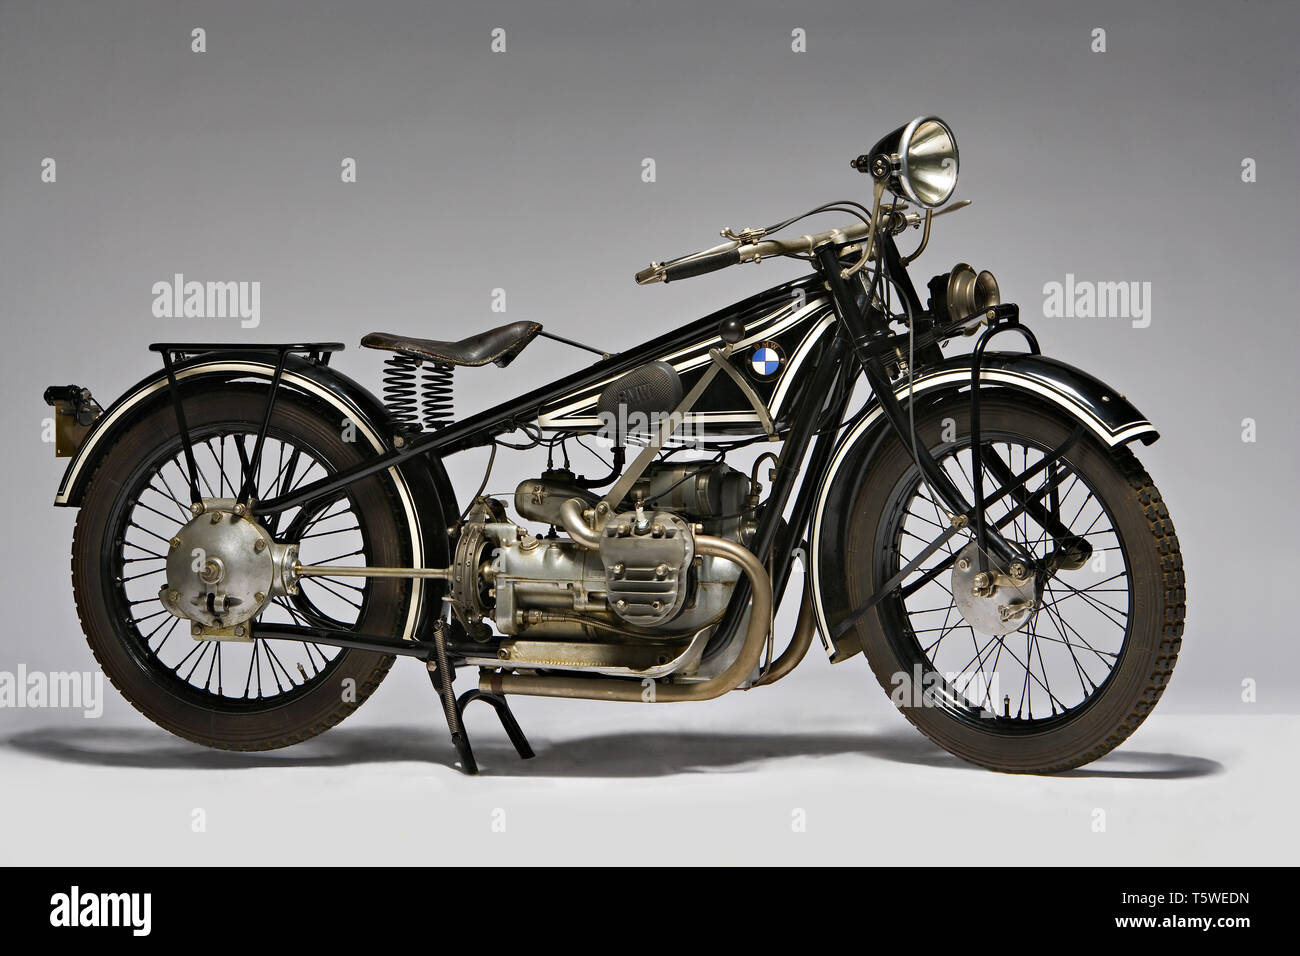 Moto d'epoca BMW R 42 Marque : Bayerische Motoren Werke modello : R 42 nazione : Germania anno 1927 - Monaco : conditions : restaurata cili Banque D'Images